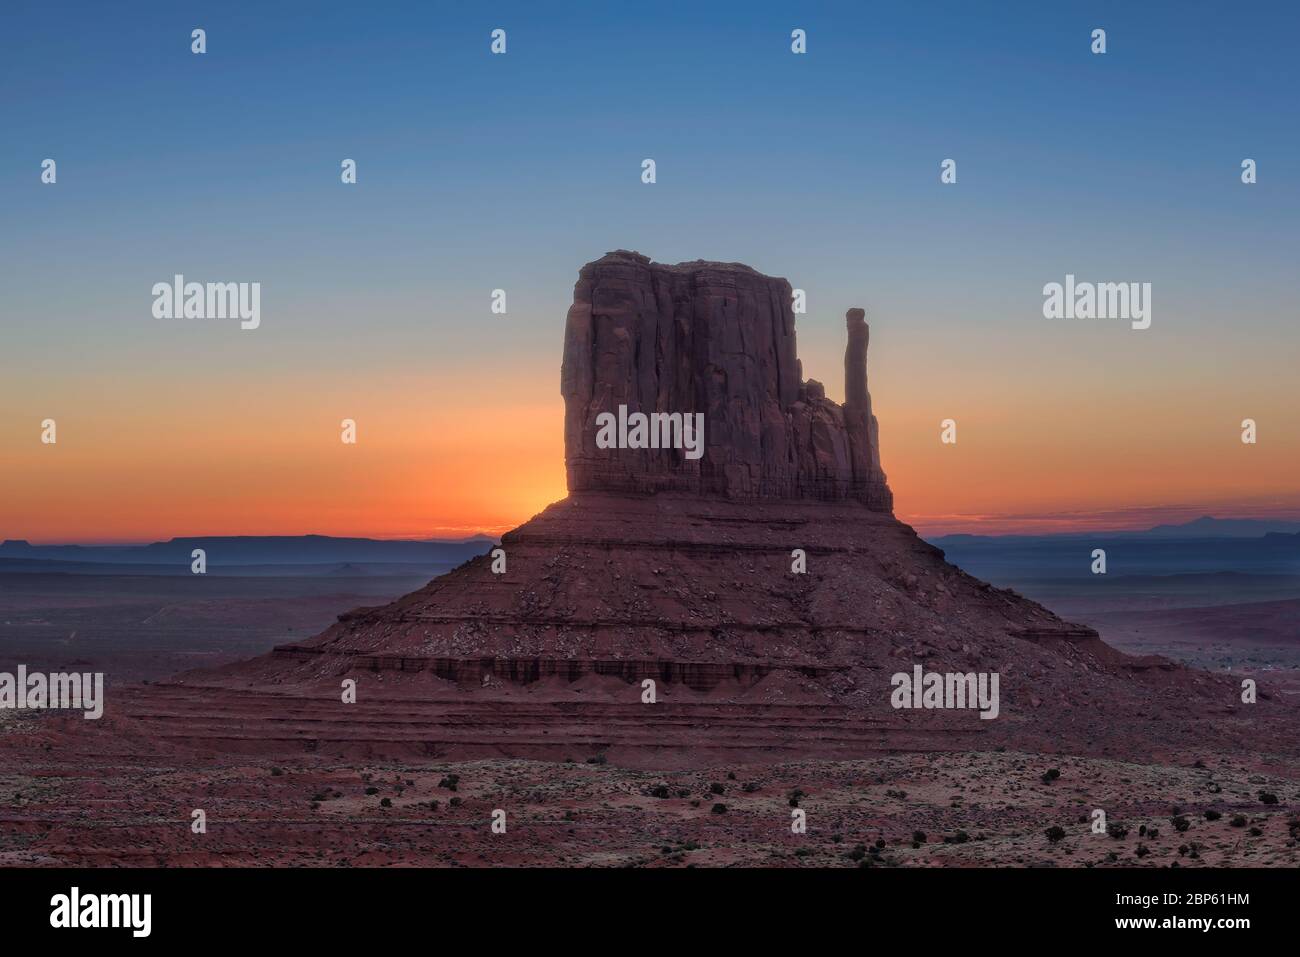 Sunrise view at Monument Valley, Arizona, USA Stock Photo